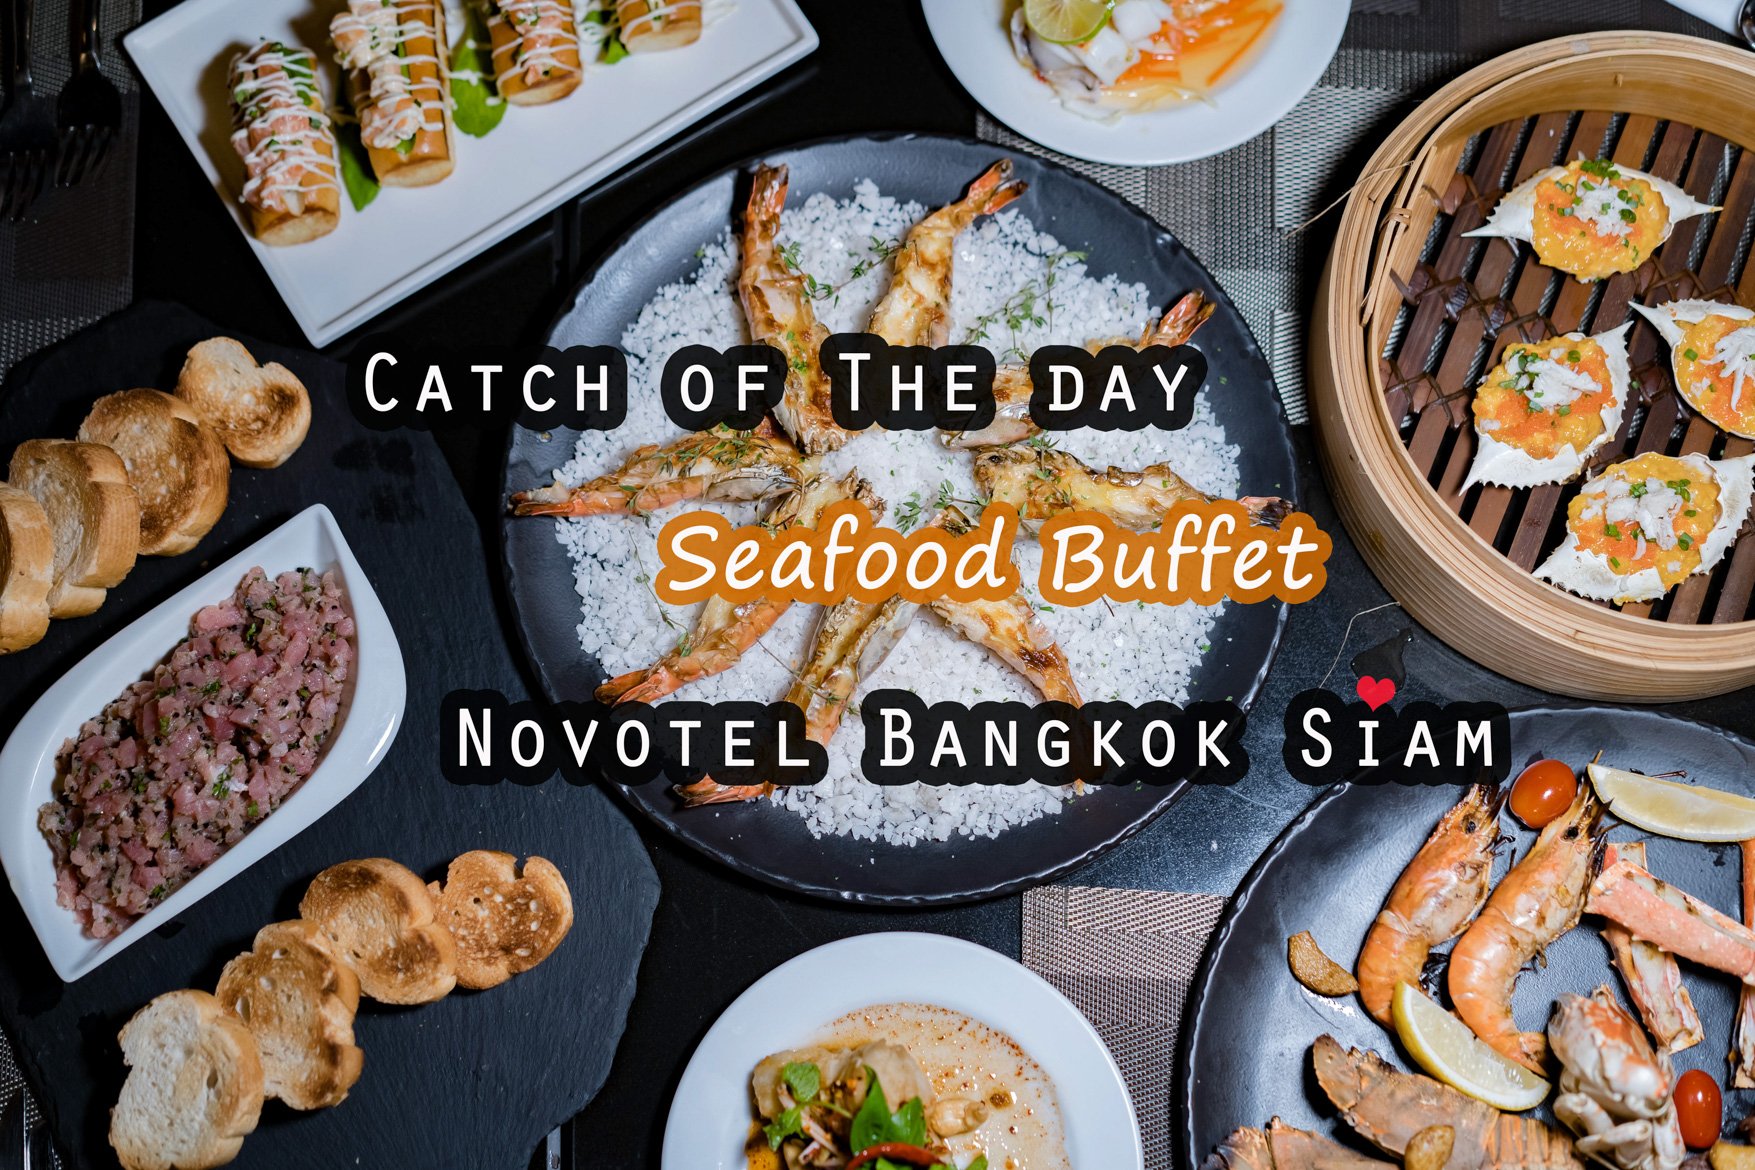 Catch of The Day ยกทะเลมาฮาเฮที่ Novotel Bangkok Siam บุฟเฟ่ต์ซีฟู๊ดส์ที่ห้ามพลาด